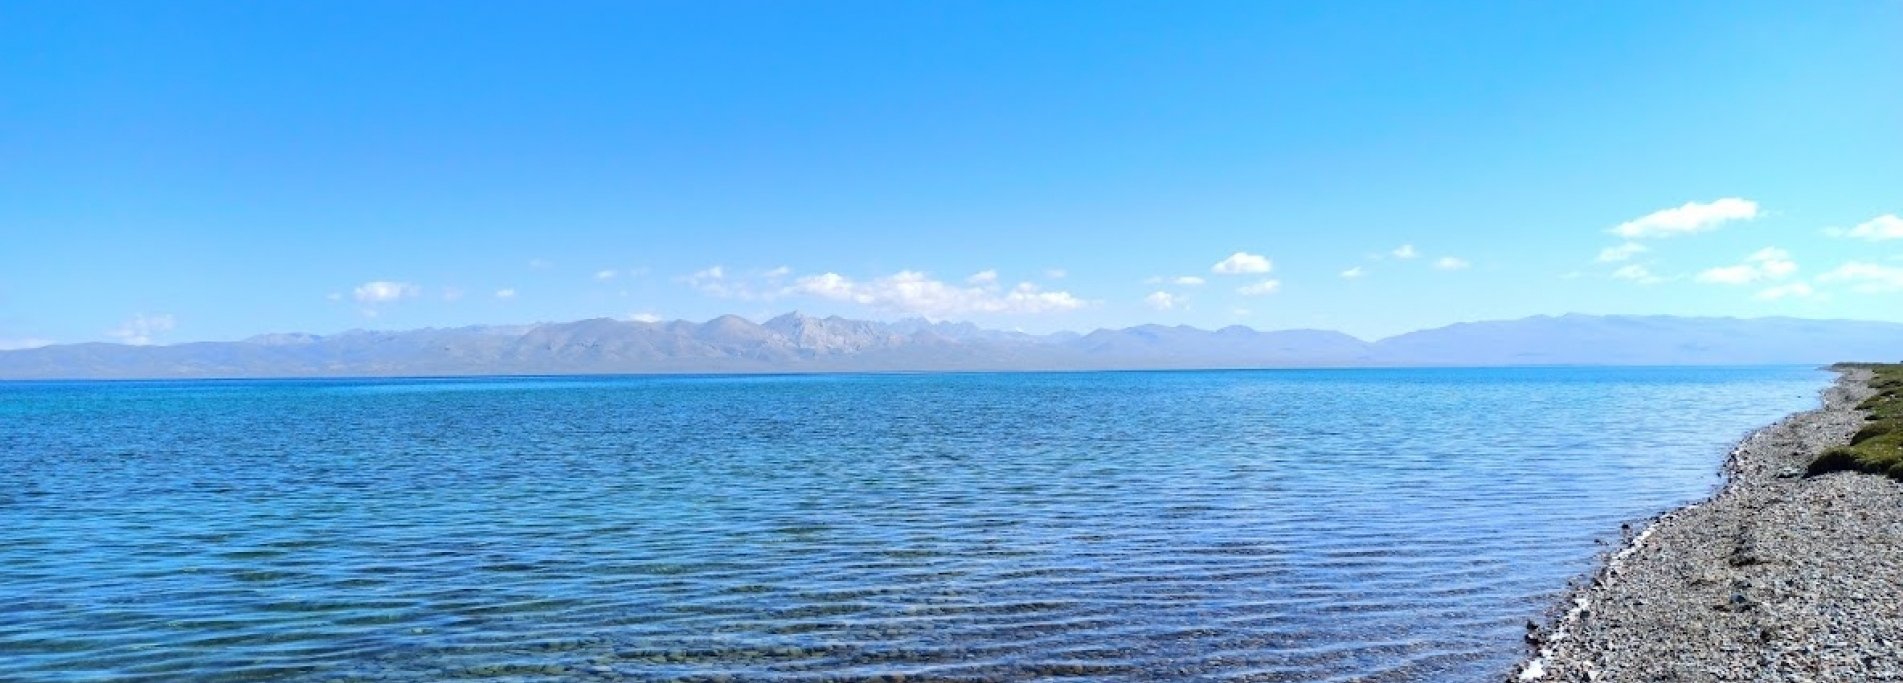 5 days in Kyrgyzstan - Lake Issyk-Kul and Son-Kul